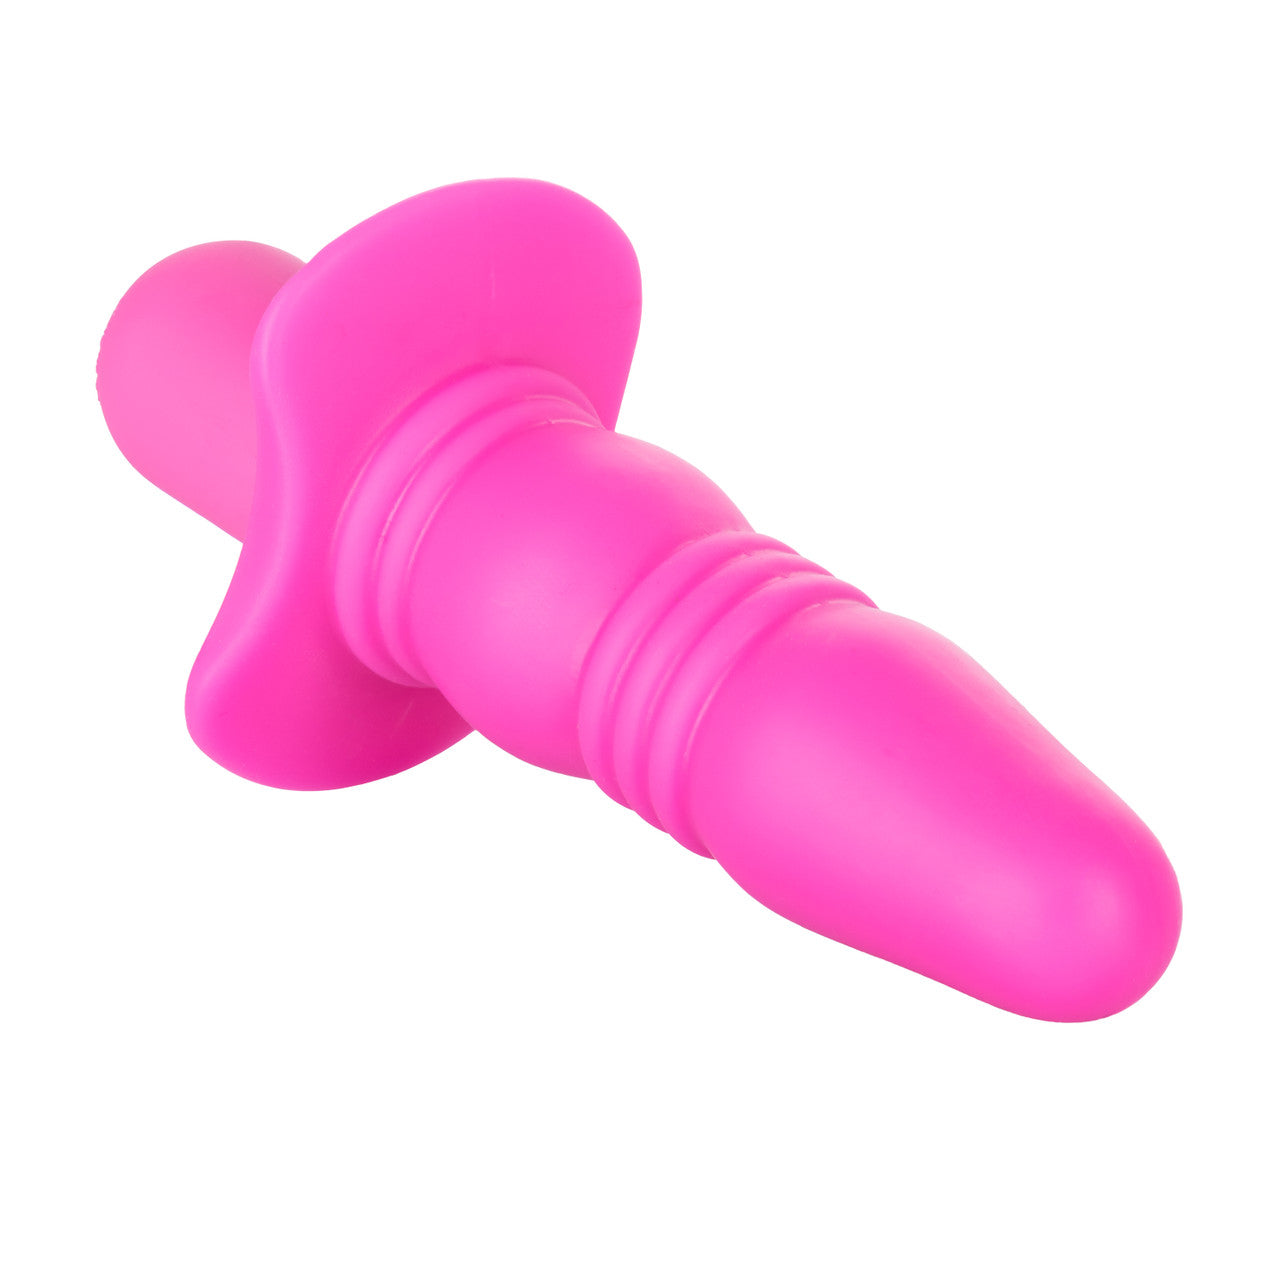 Booty Buzz Vibrating Butt Plug - Pink